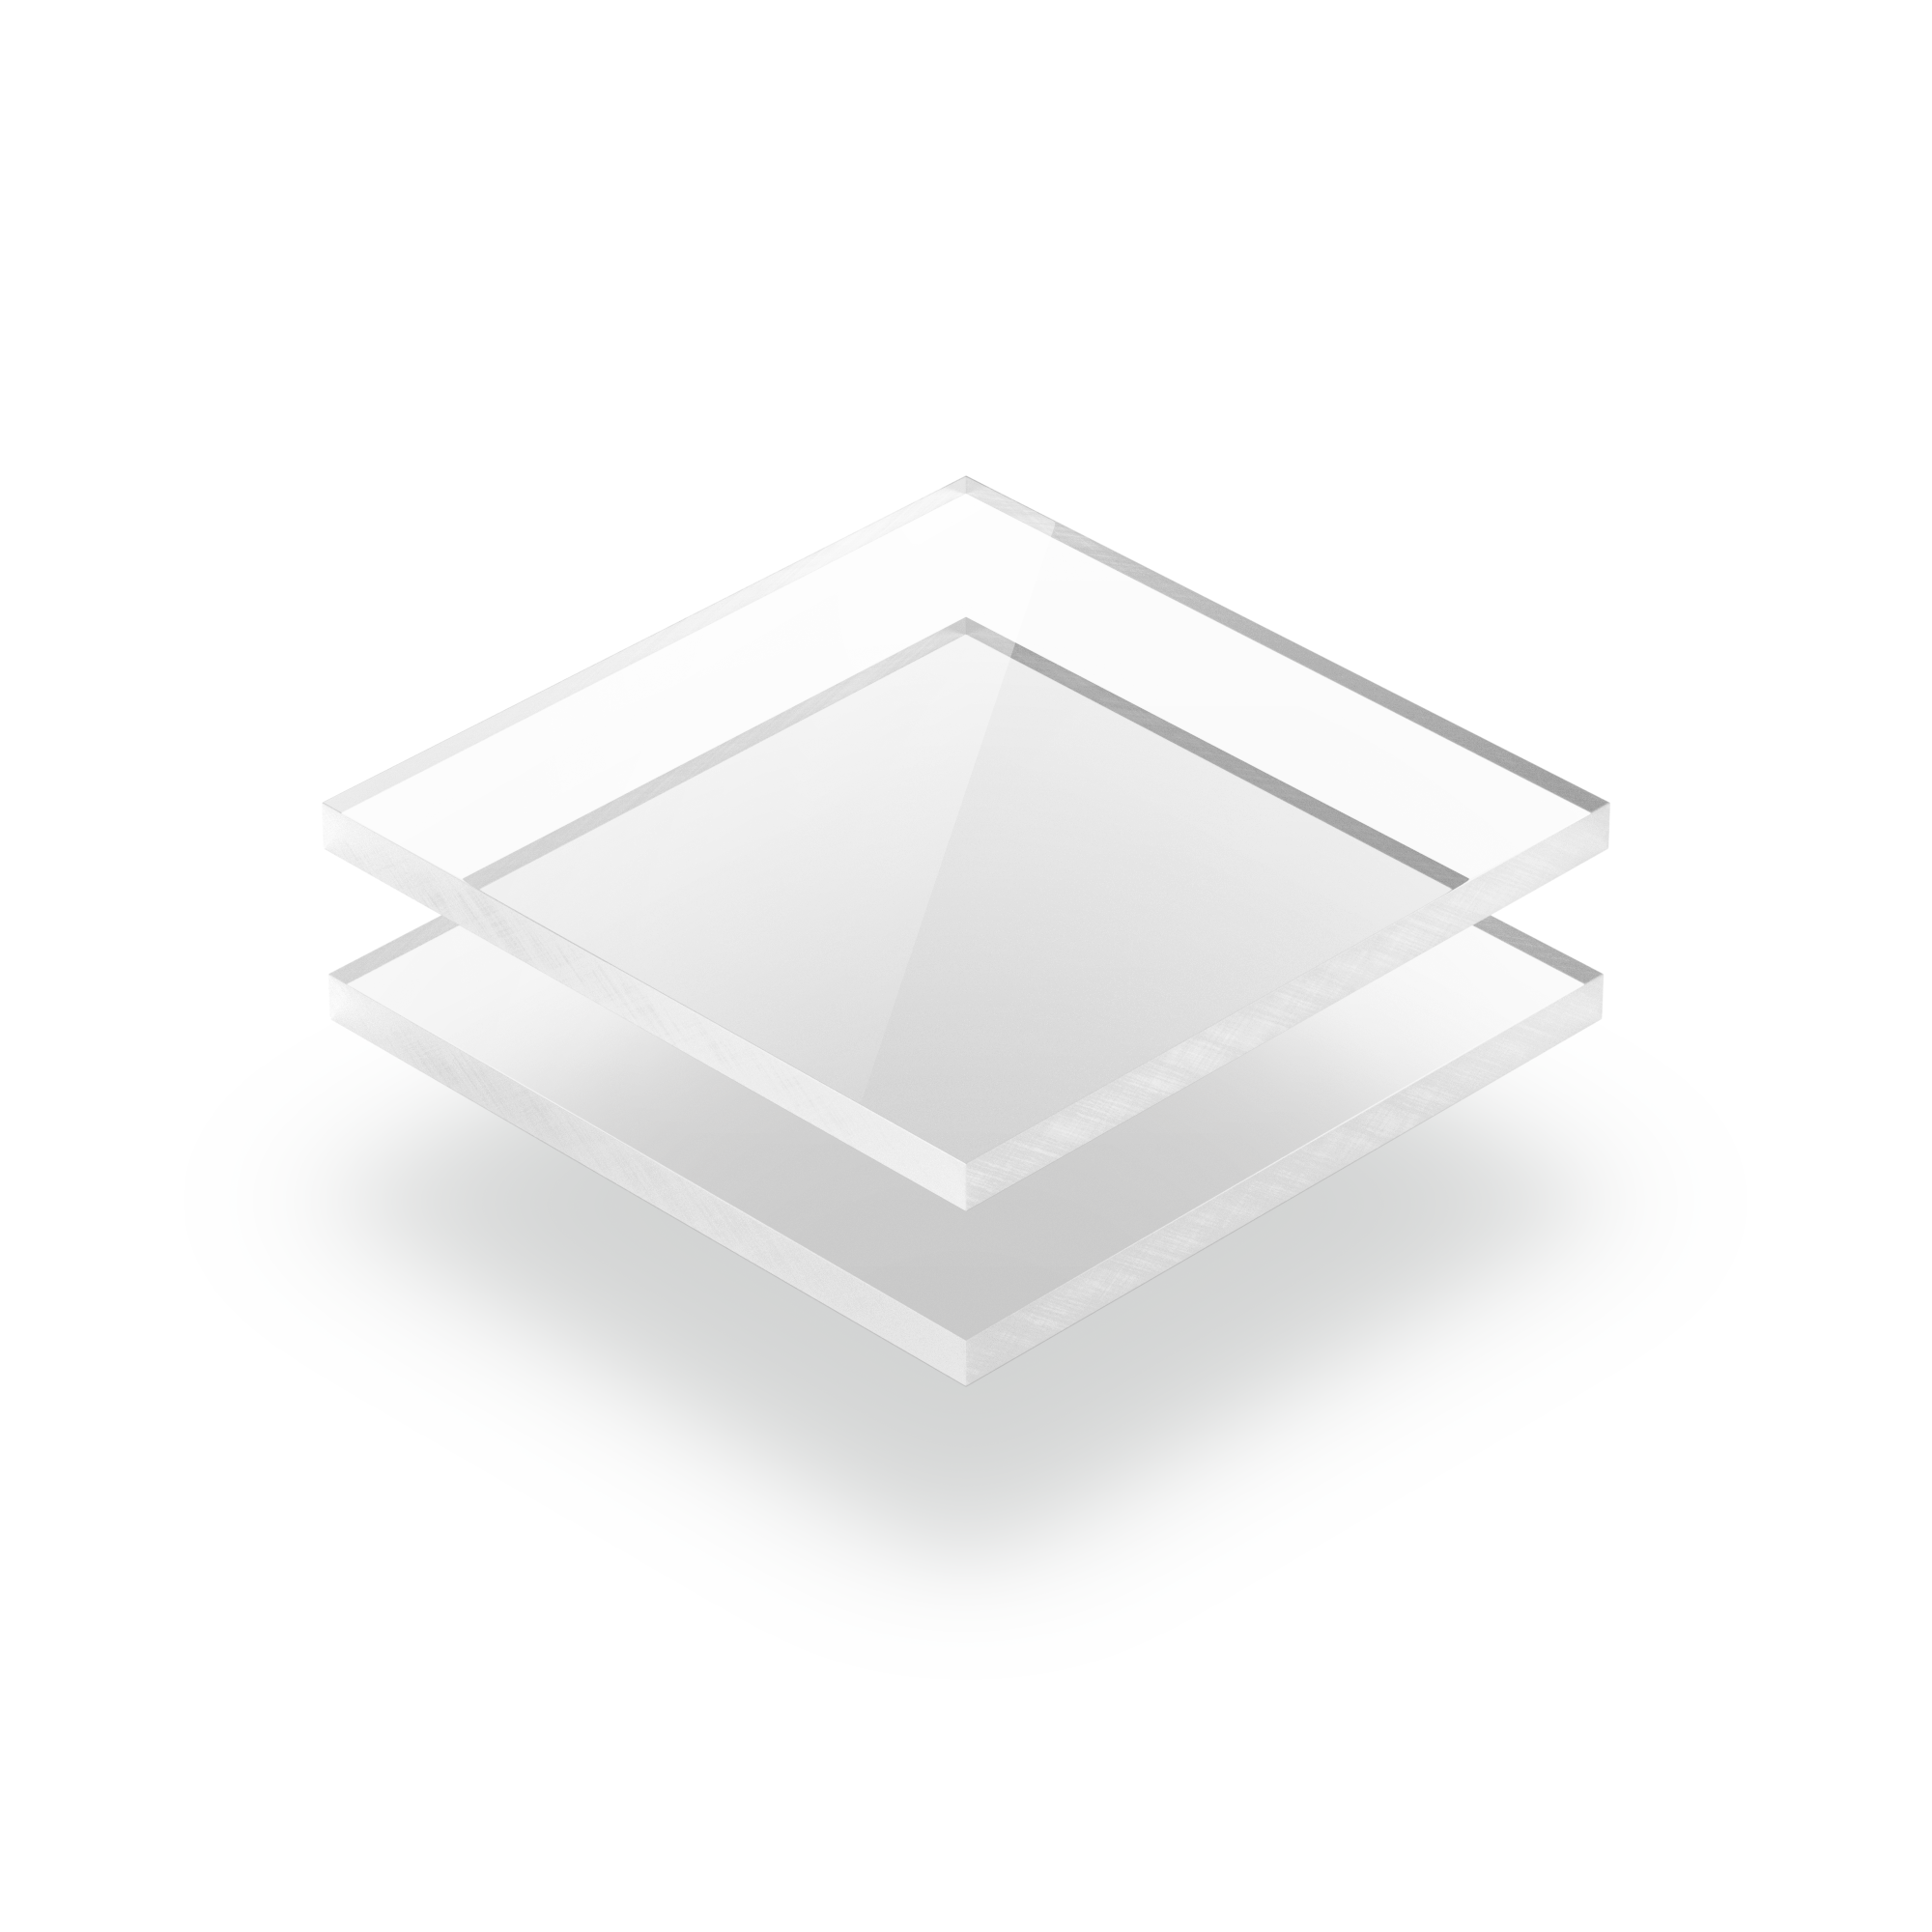 1x 2mm Acrylglas Platte Acryl Kunststoff transparent 24x32 cm 